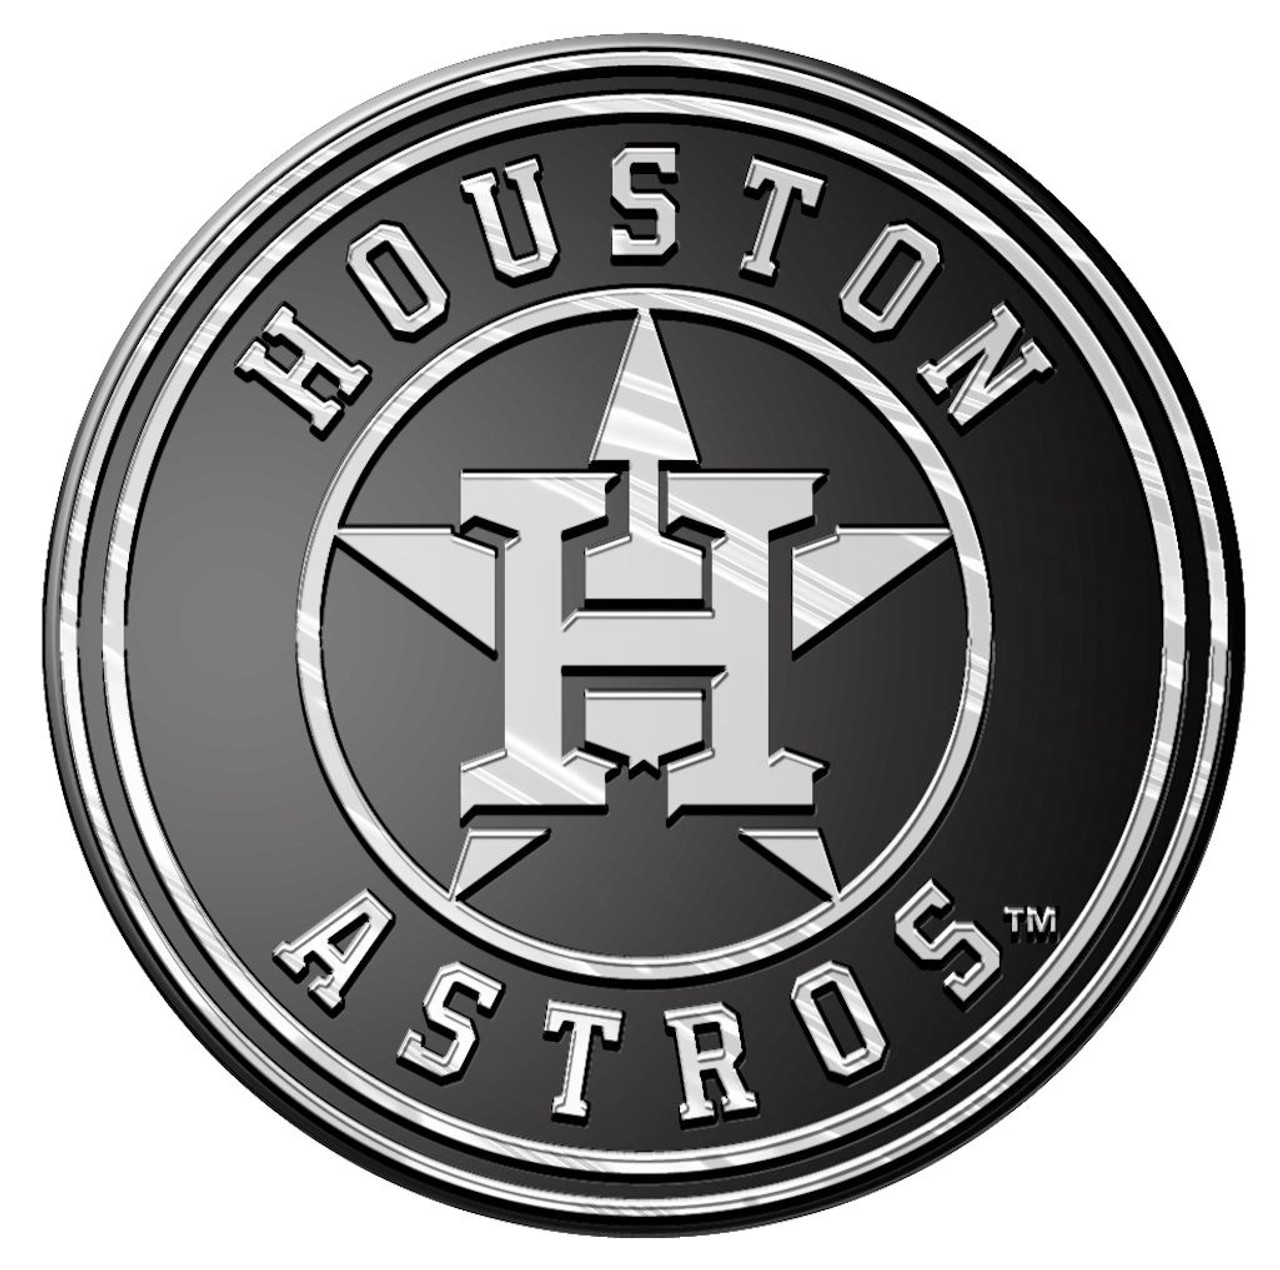 Houston Astros Logo Vector Set